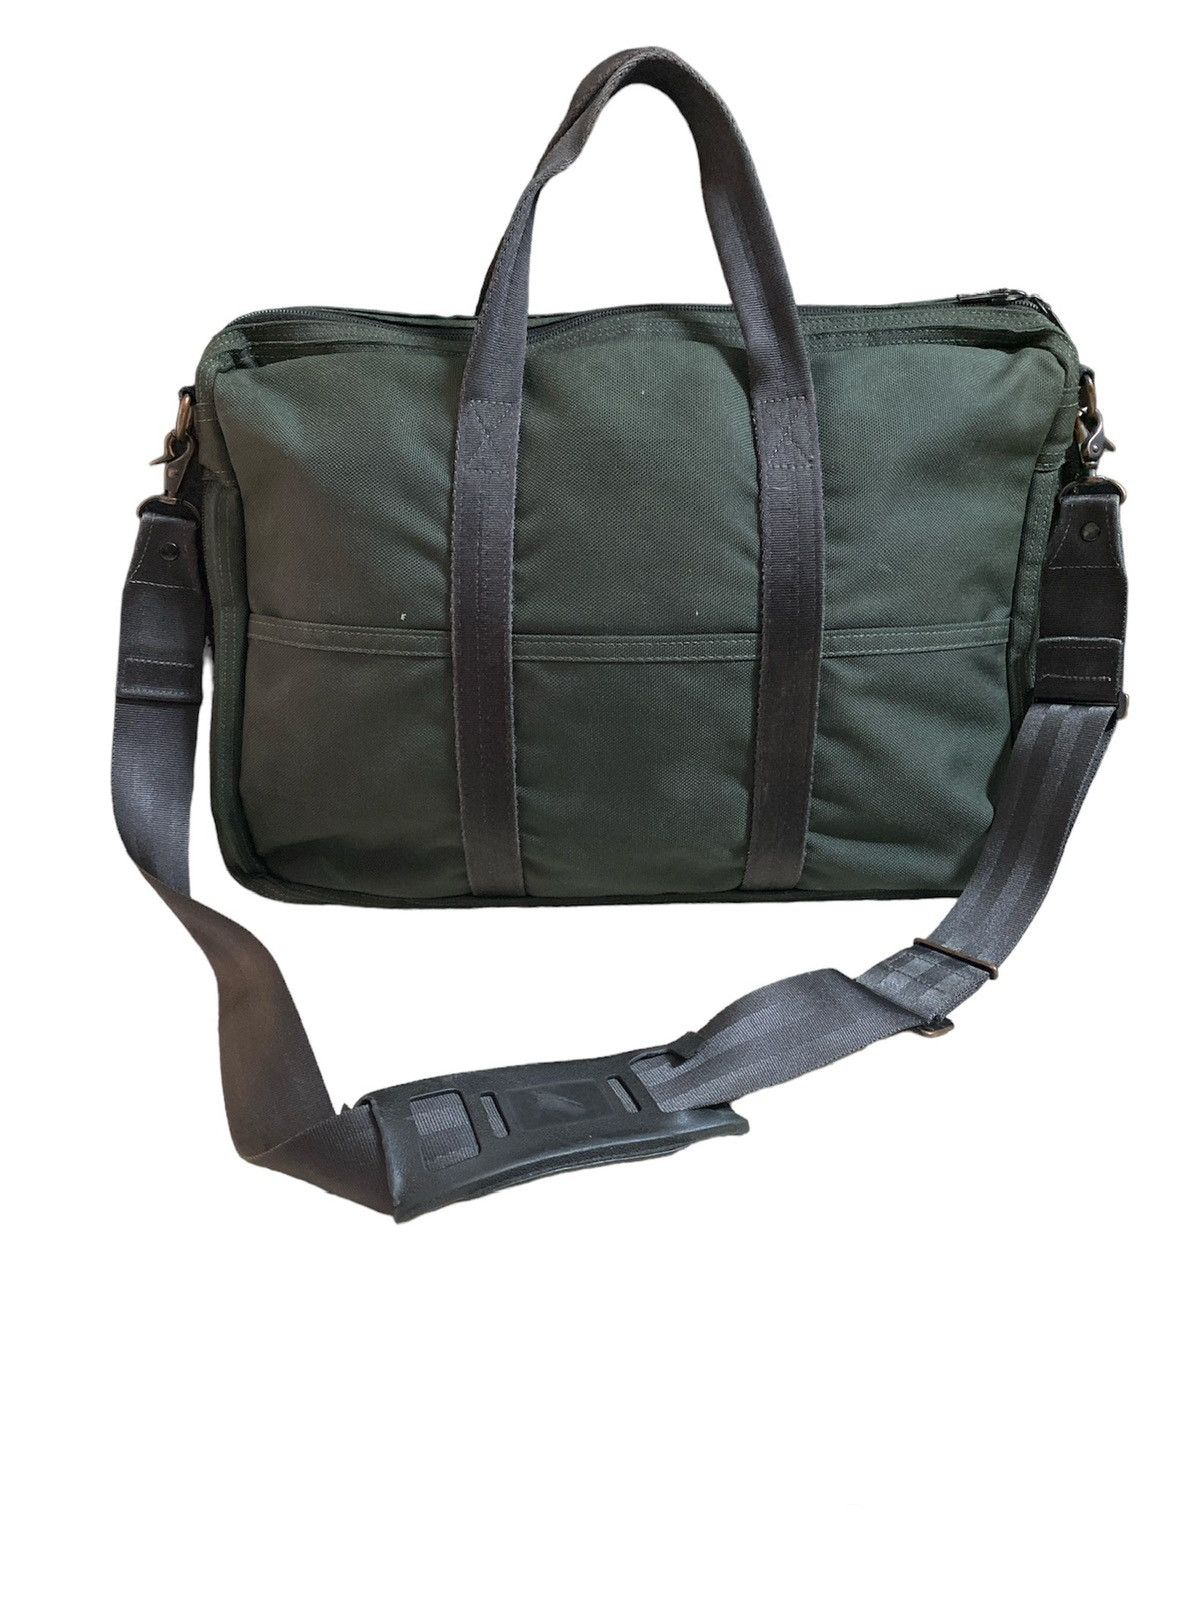 Porter Cordura Messenger Bag Green Army Made in Japan - 2